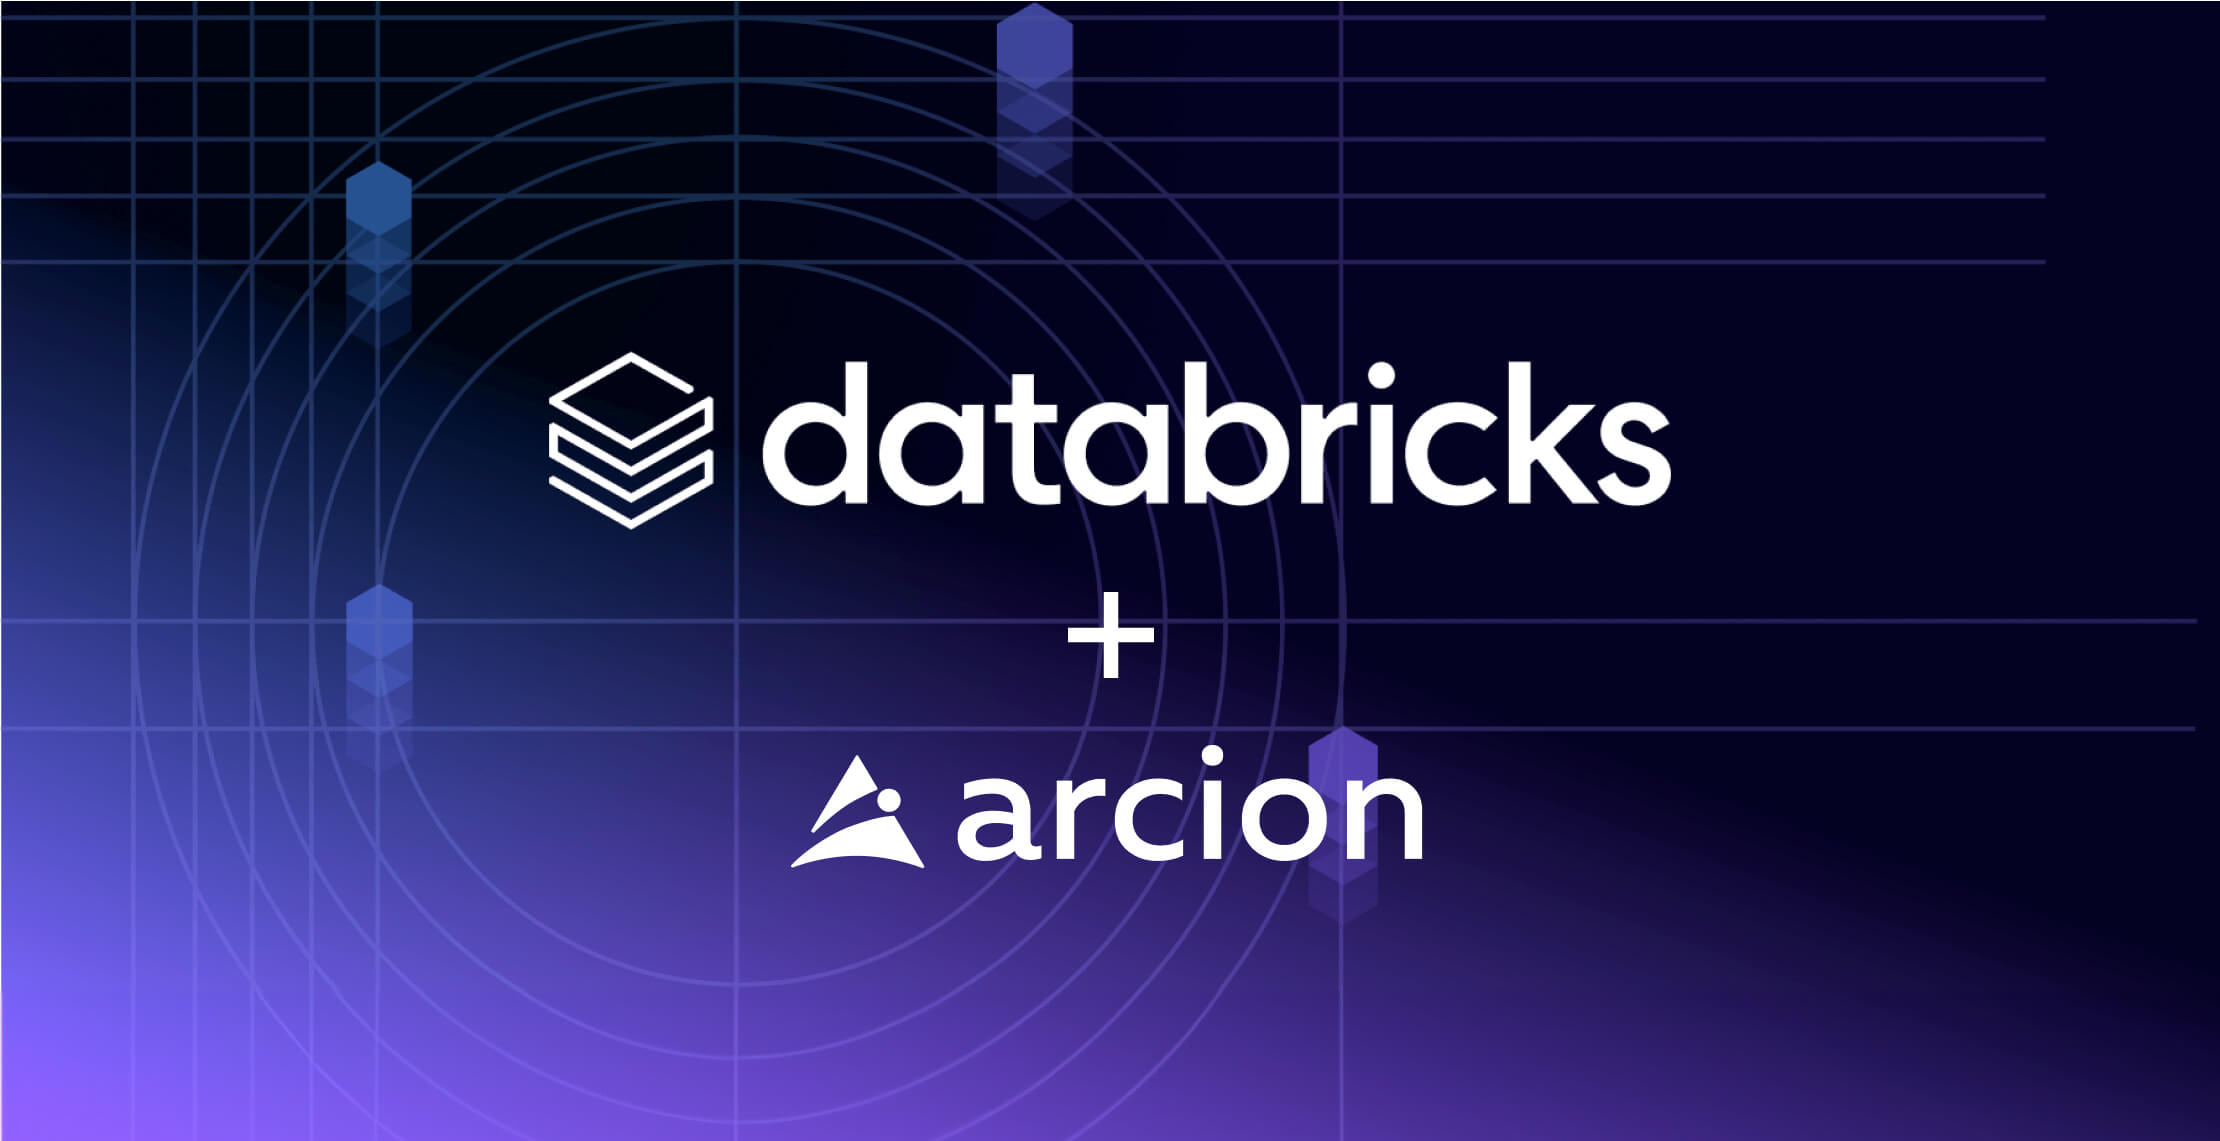 databricks-makes-100m-acquisition-of-data-replication-startup-arcion